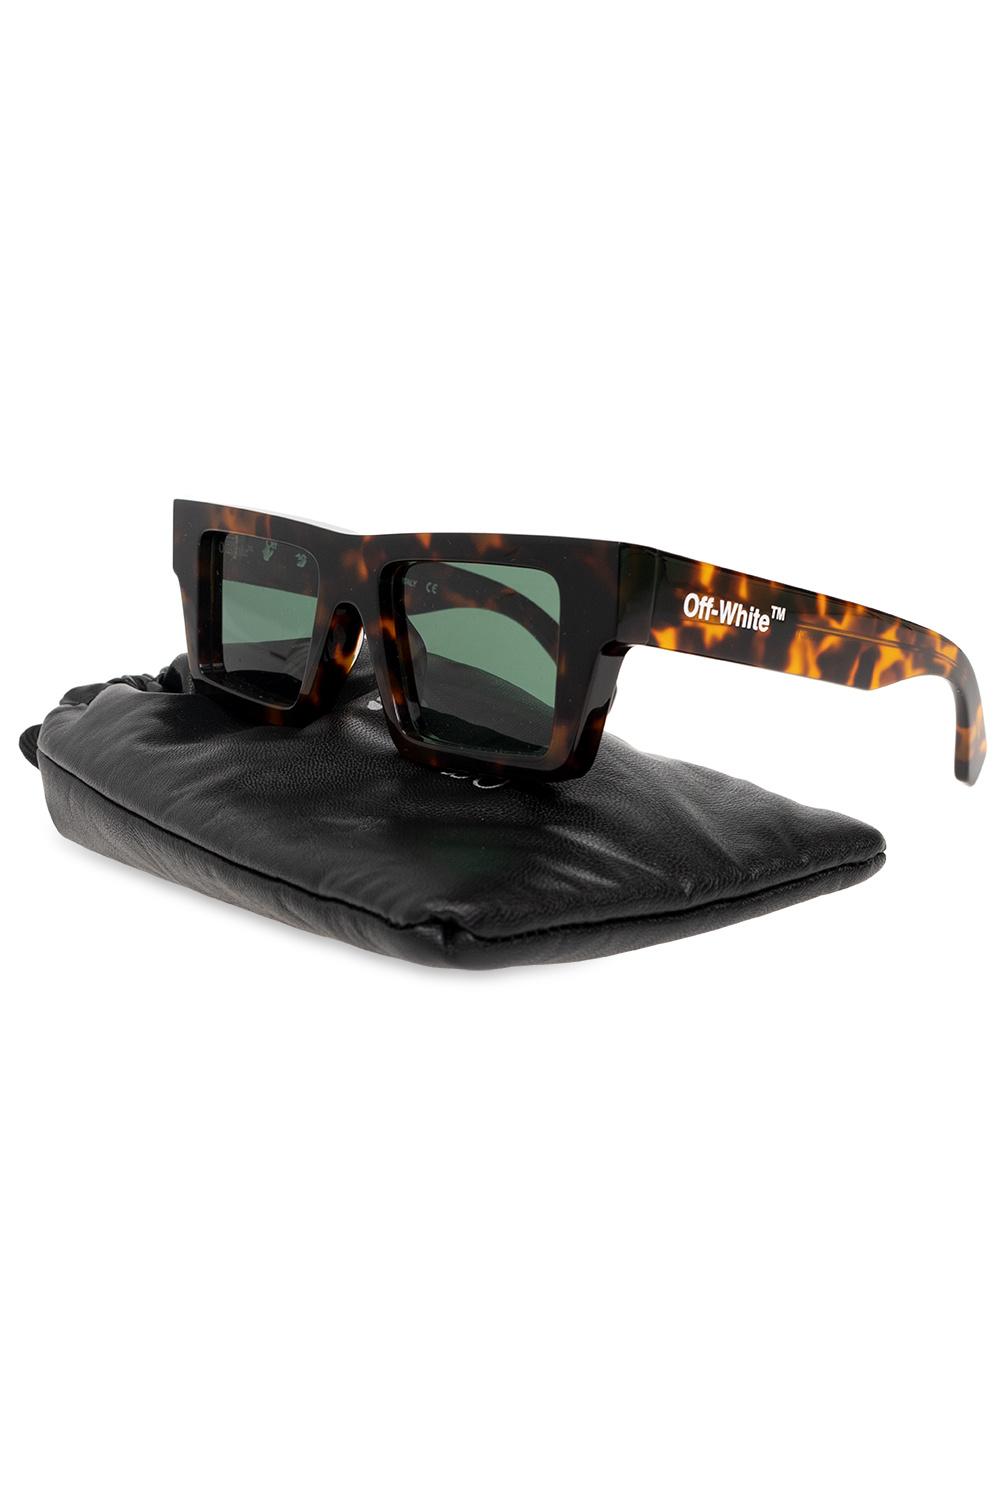 Off-White c/o Virgil Abloh 2021 Manchester Sunglasses - Brown Sunglasses,  Accessories - WOWVA49144